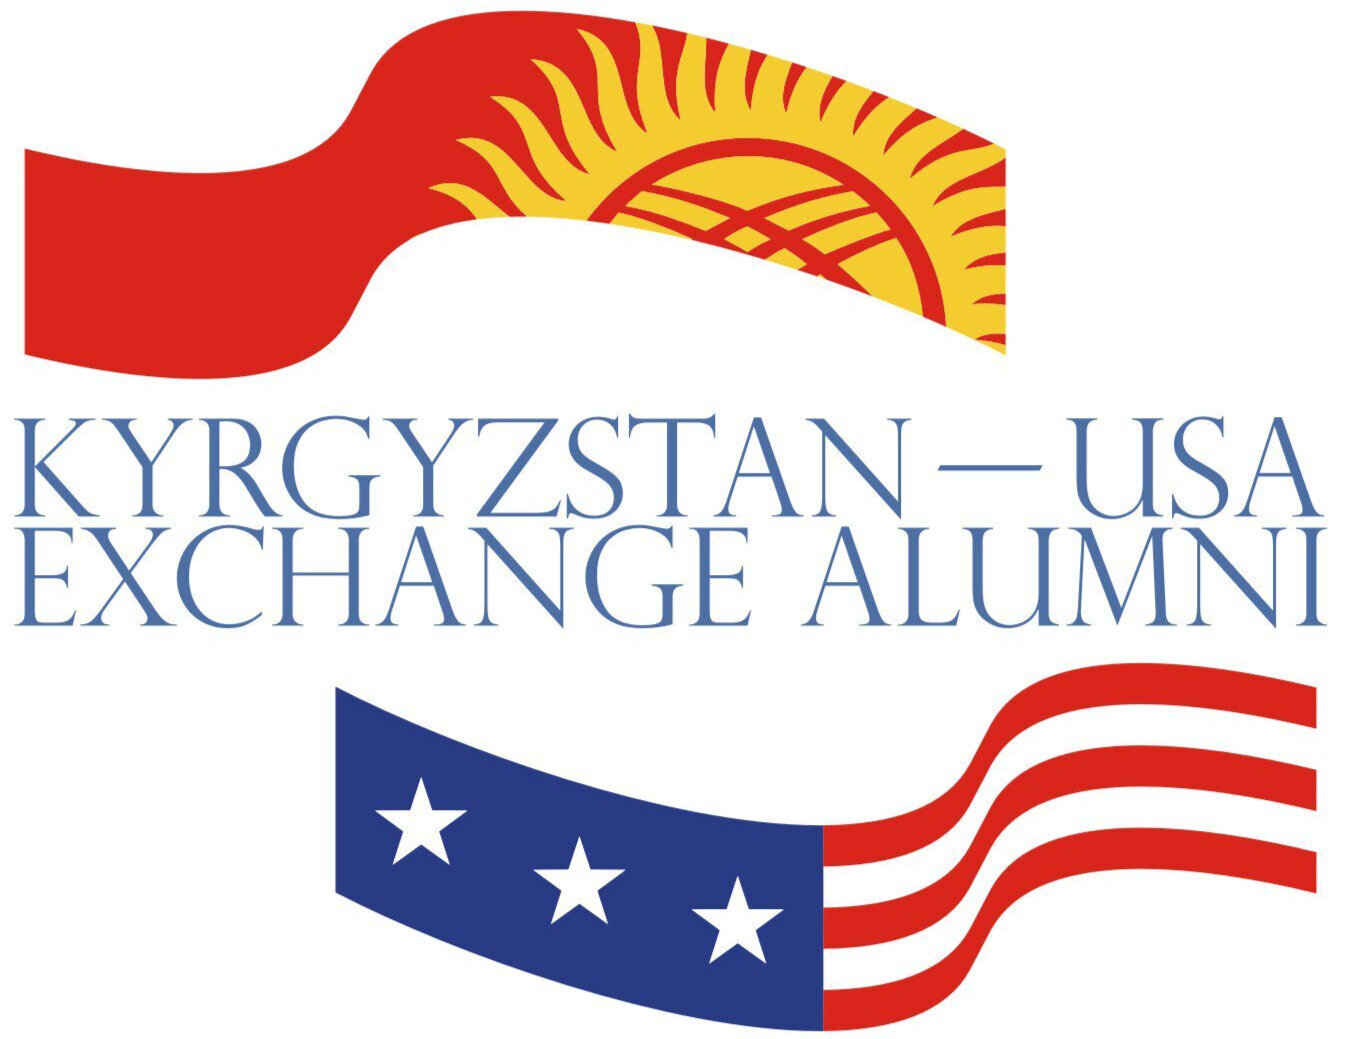 Kyrgyzstan+-+U.S.+Exchange+Alumni.jpg